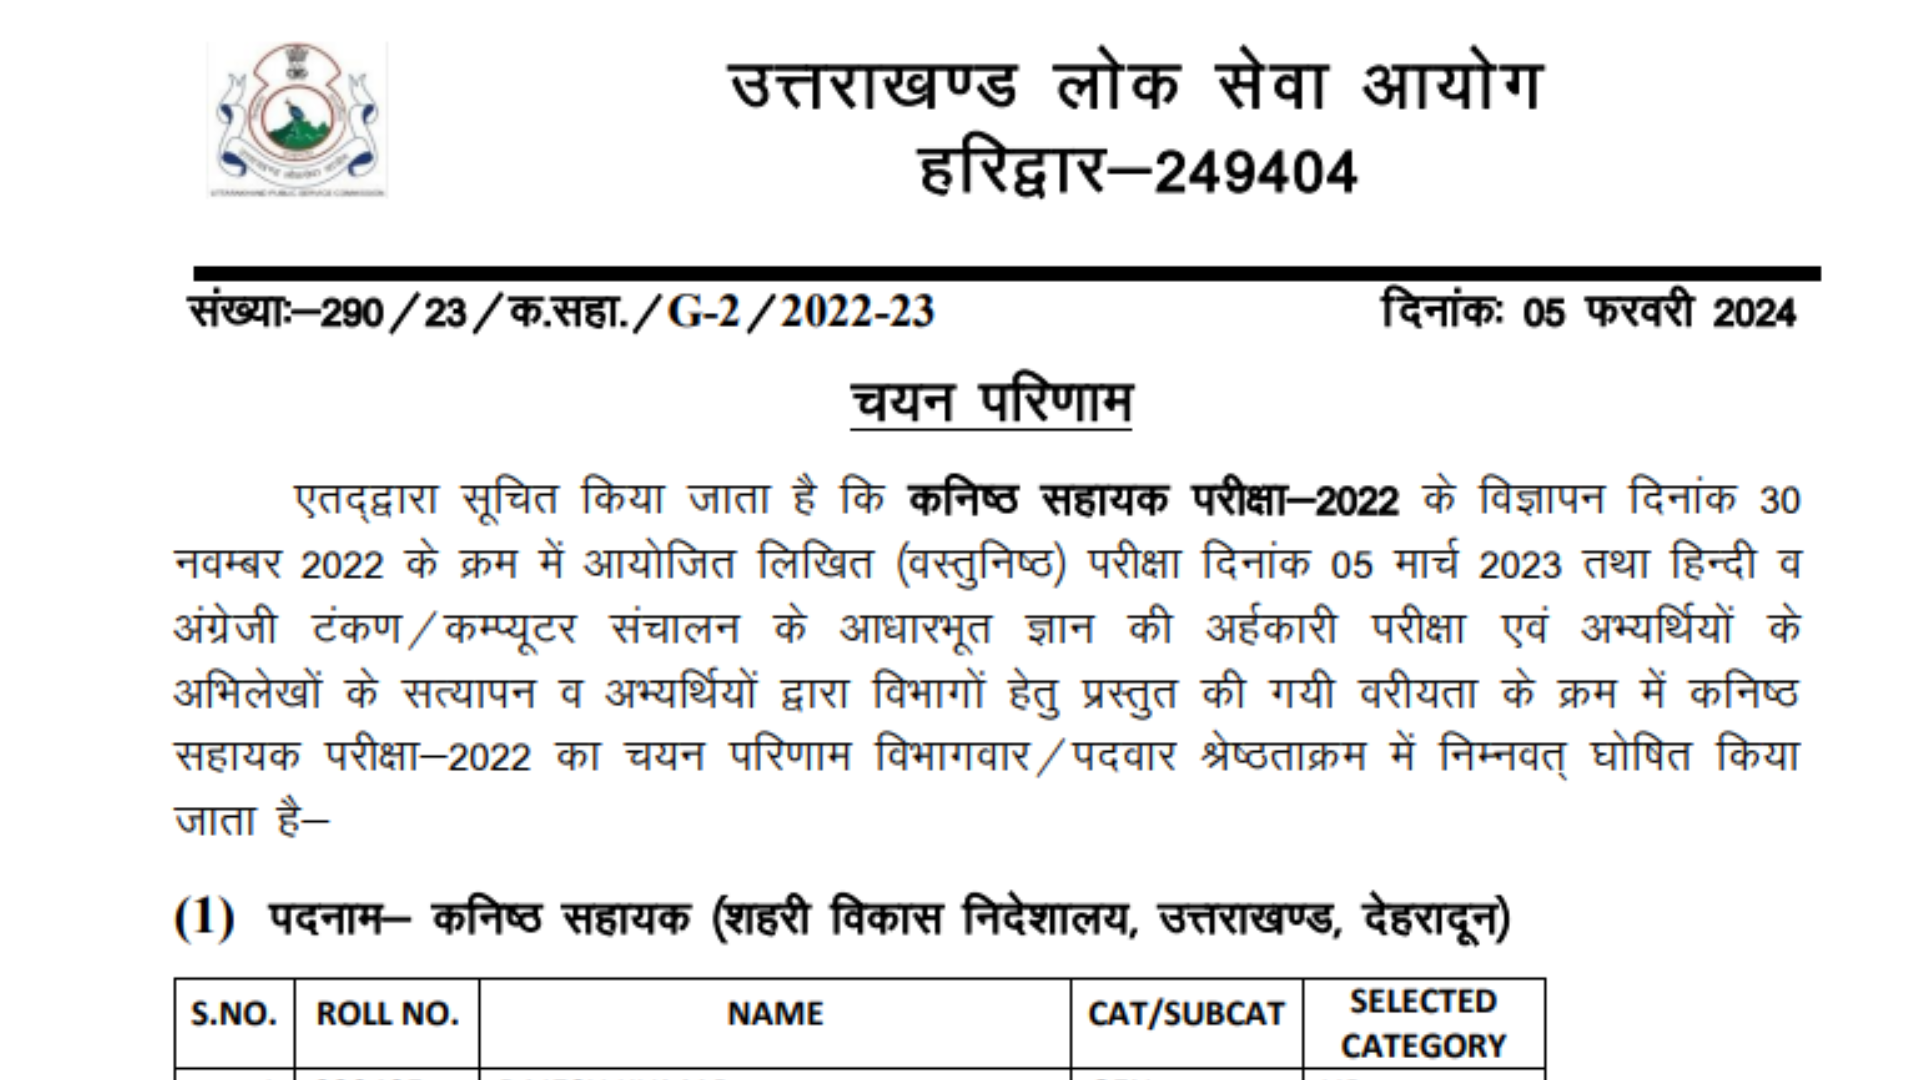 UKPSC Uttarakhand 10+2 Junior Assistant Recruitment 2022 Result, Marks and Cutoff 2024 for 445 Post